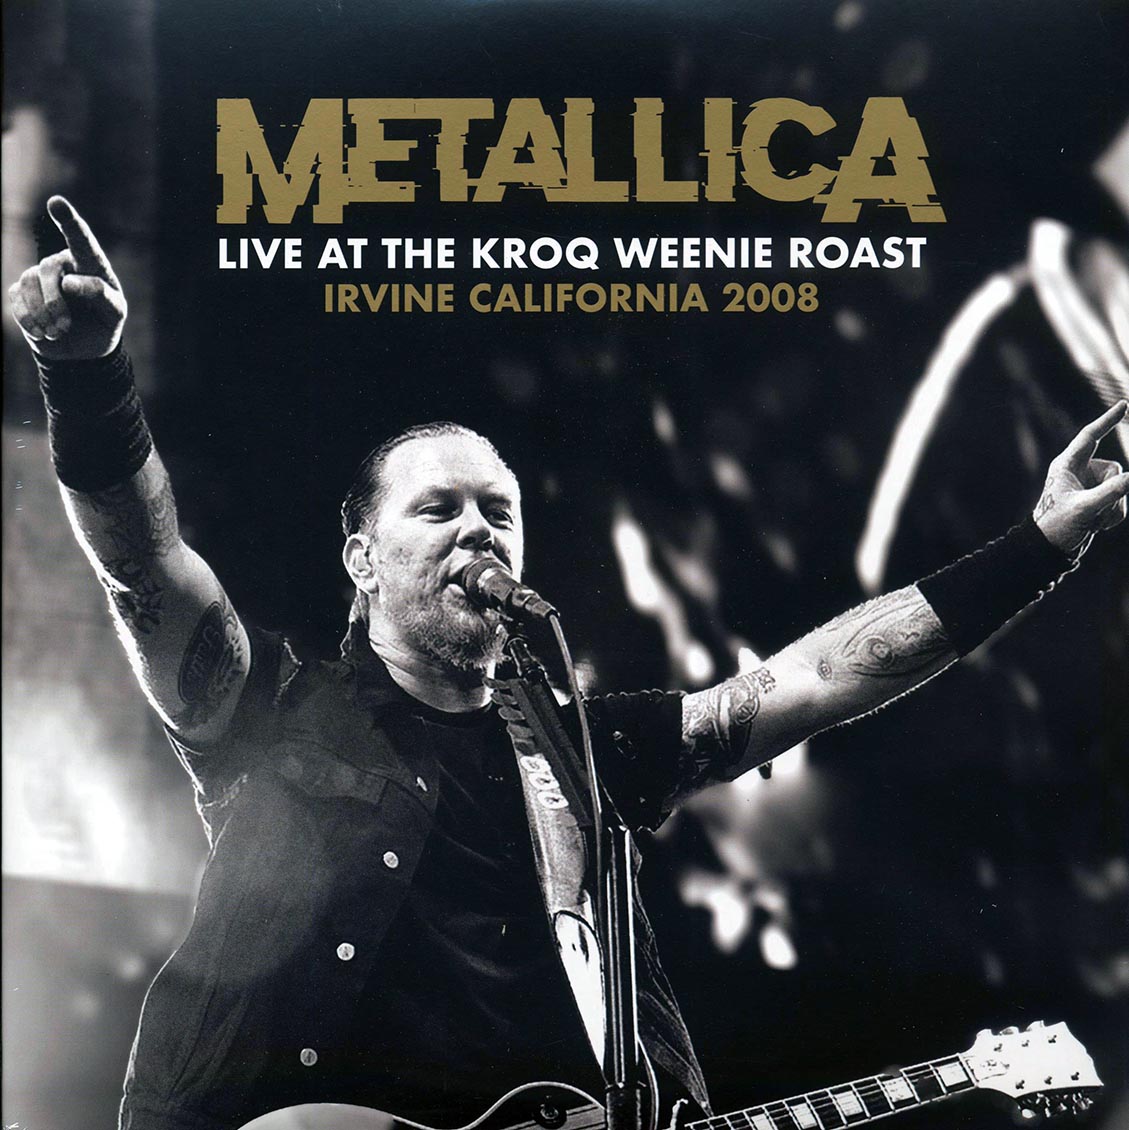 Metallica - Live At The KROQ Weenie Roast, Irvine, California 2008 (2xLP) (clear vinyl) - Vinyl LP